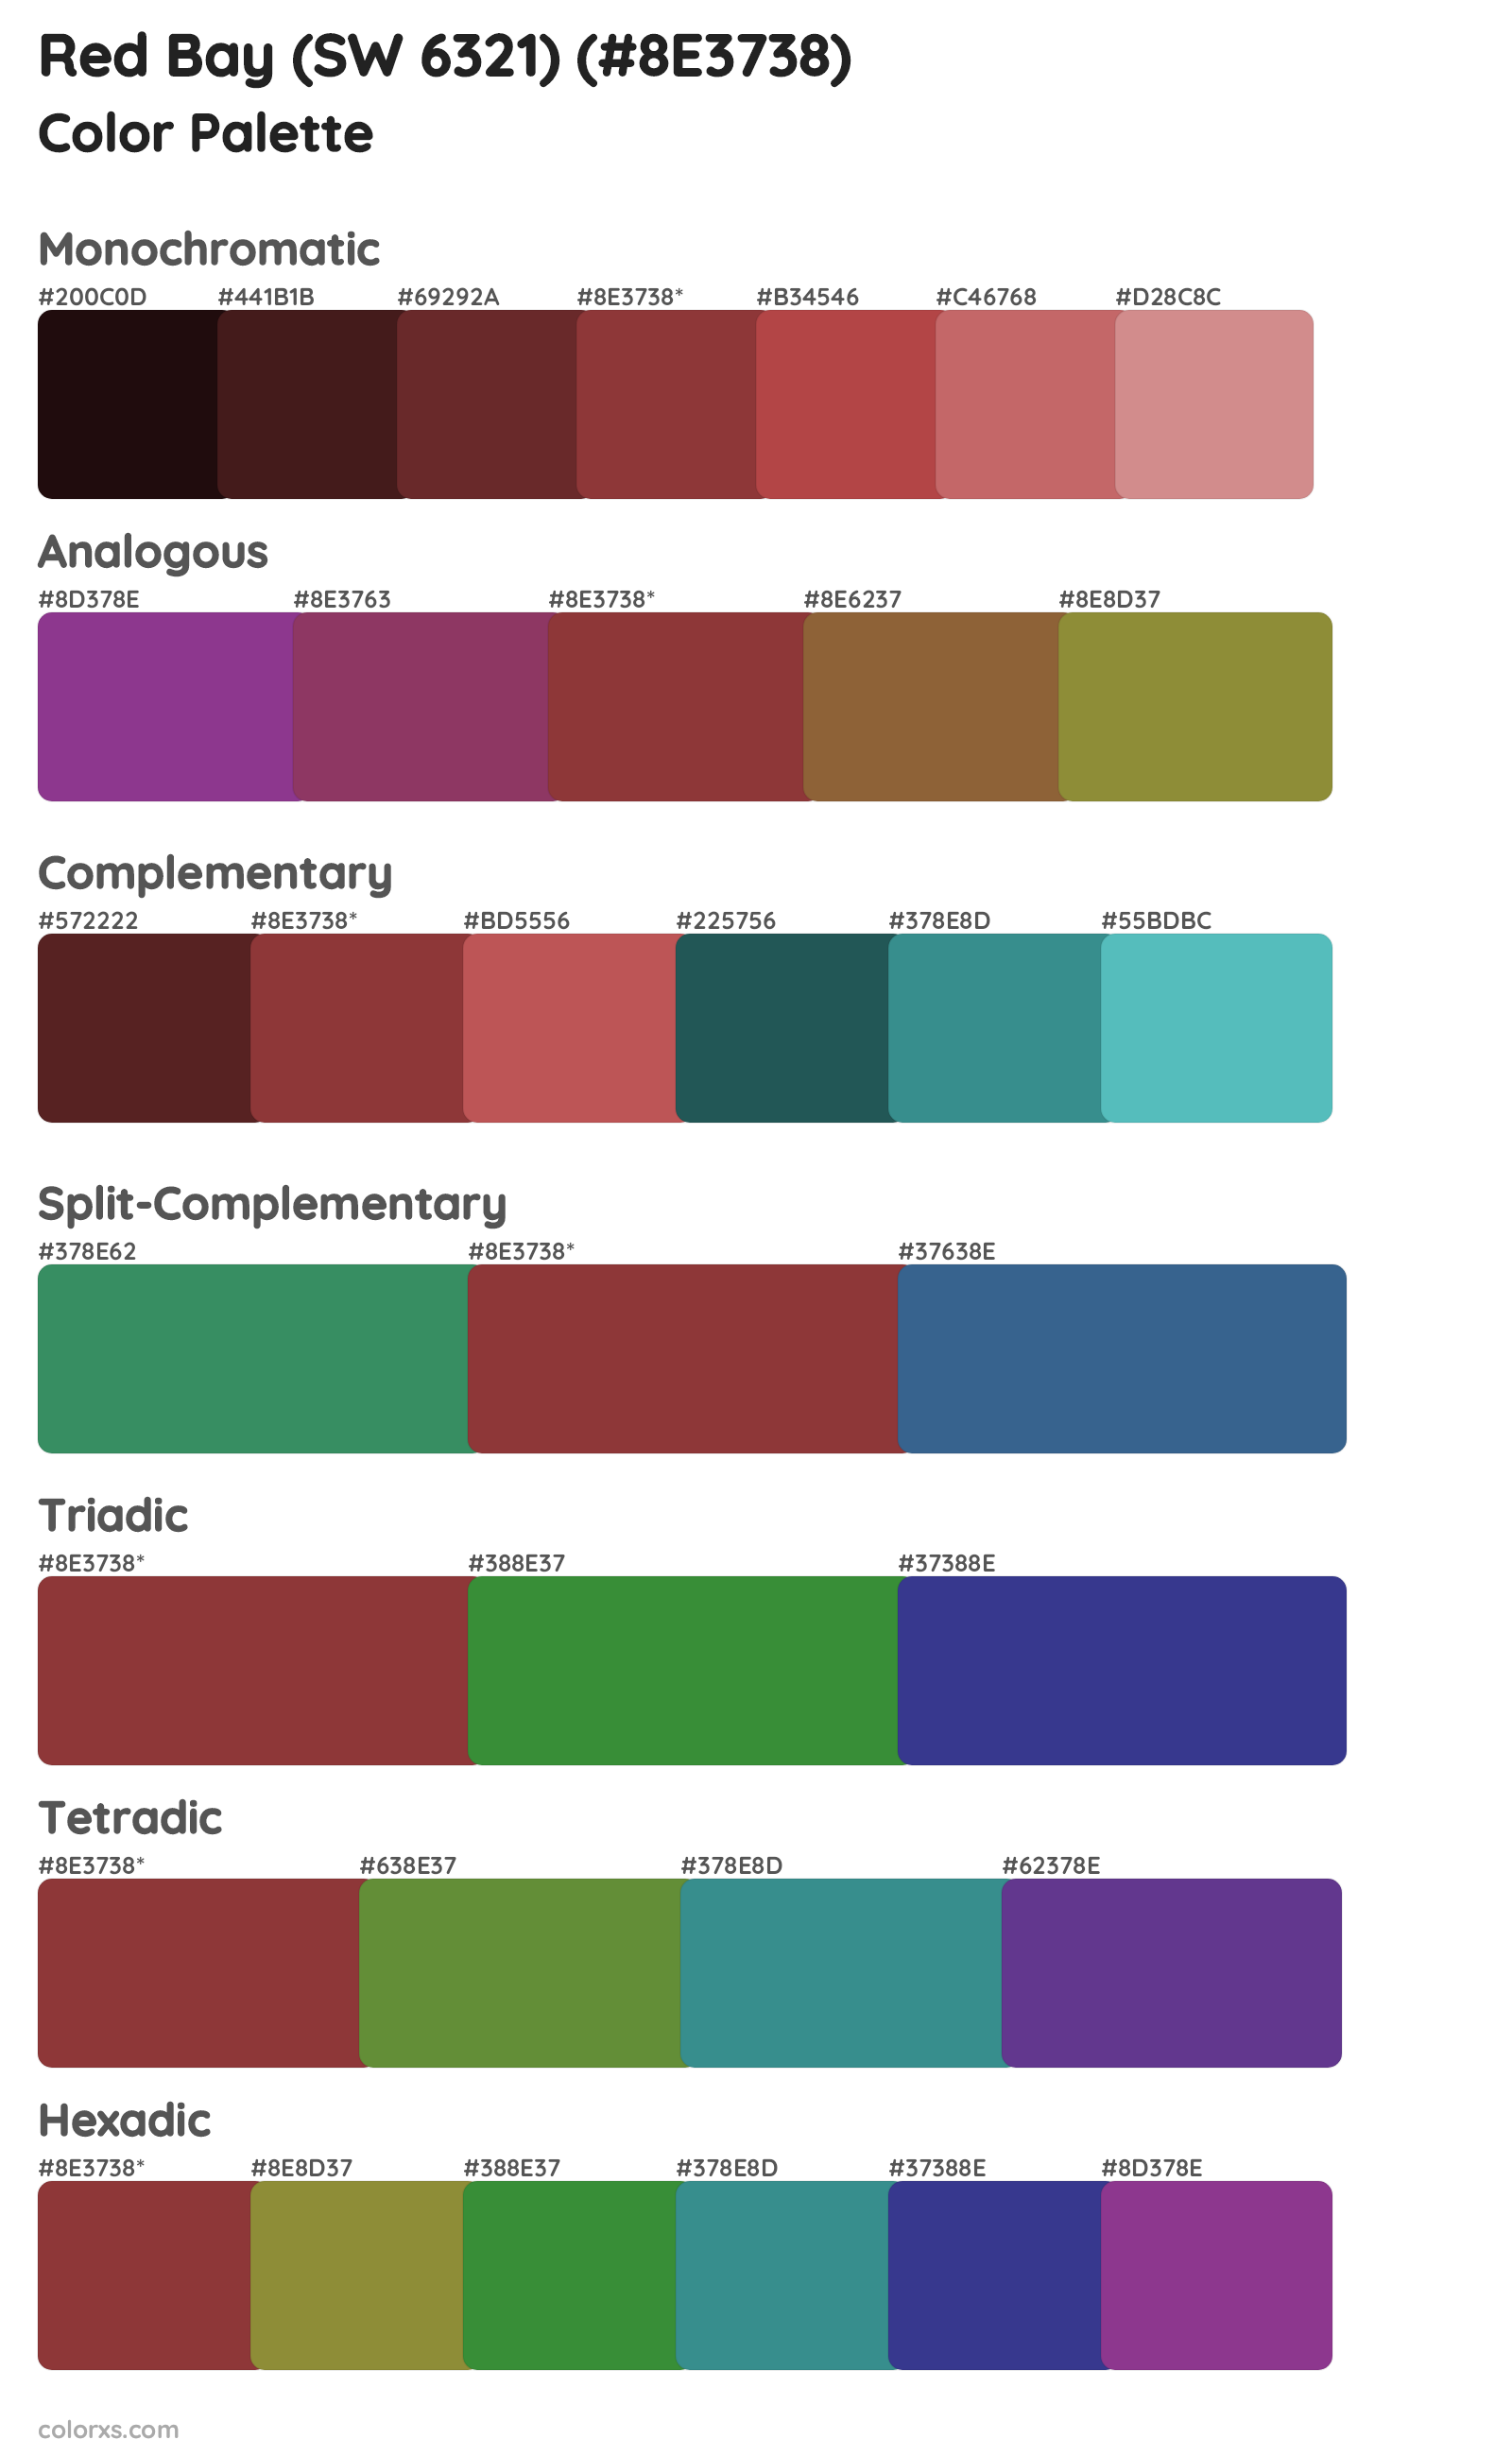 Red Bay (SW 6321) Color Scheme Palettes